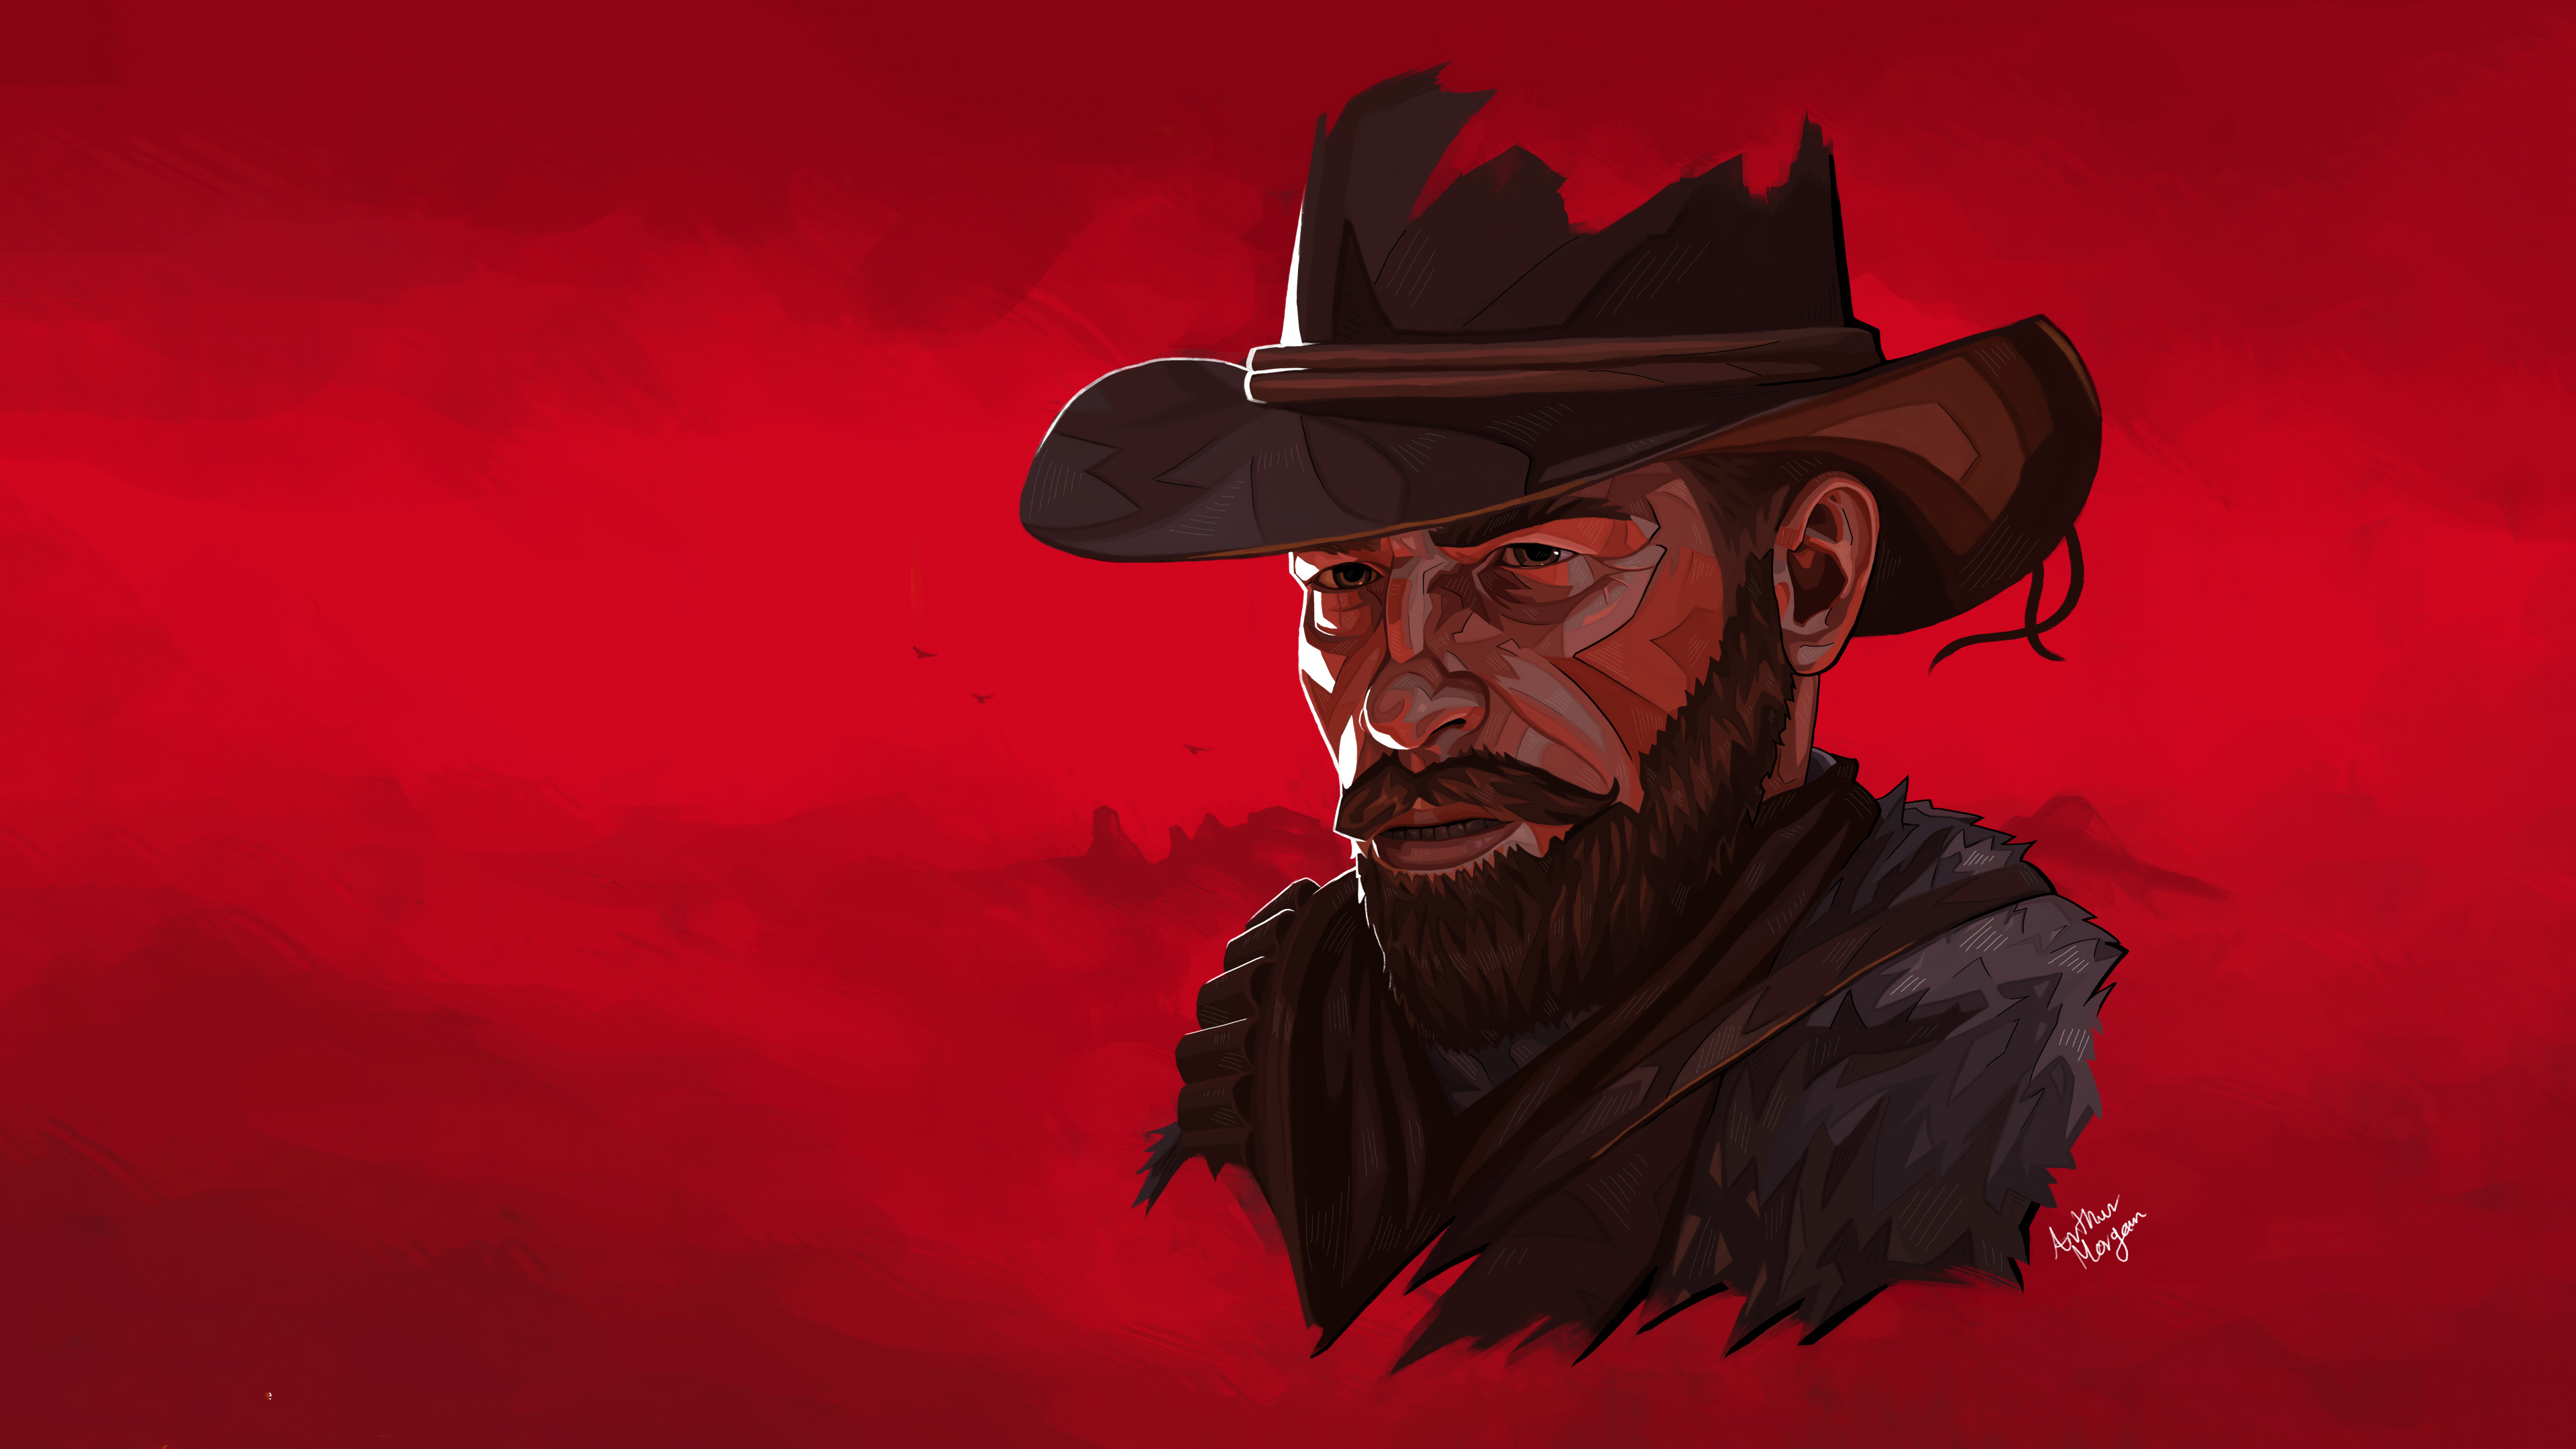 Arthur Morgan Red Dead Redemption 2 4k 2019 - Red Dead Redemption 2 Wallpaper 4k - HD Wallpaper 